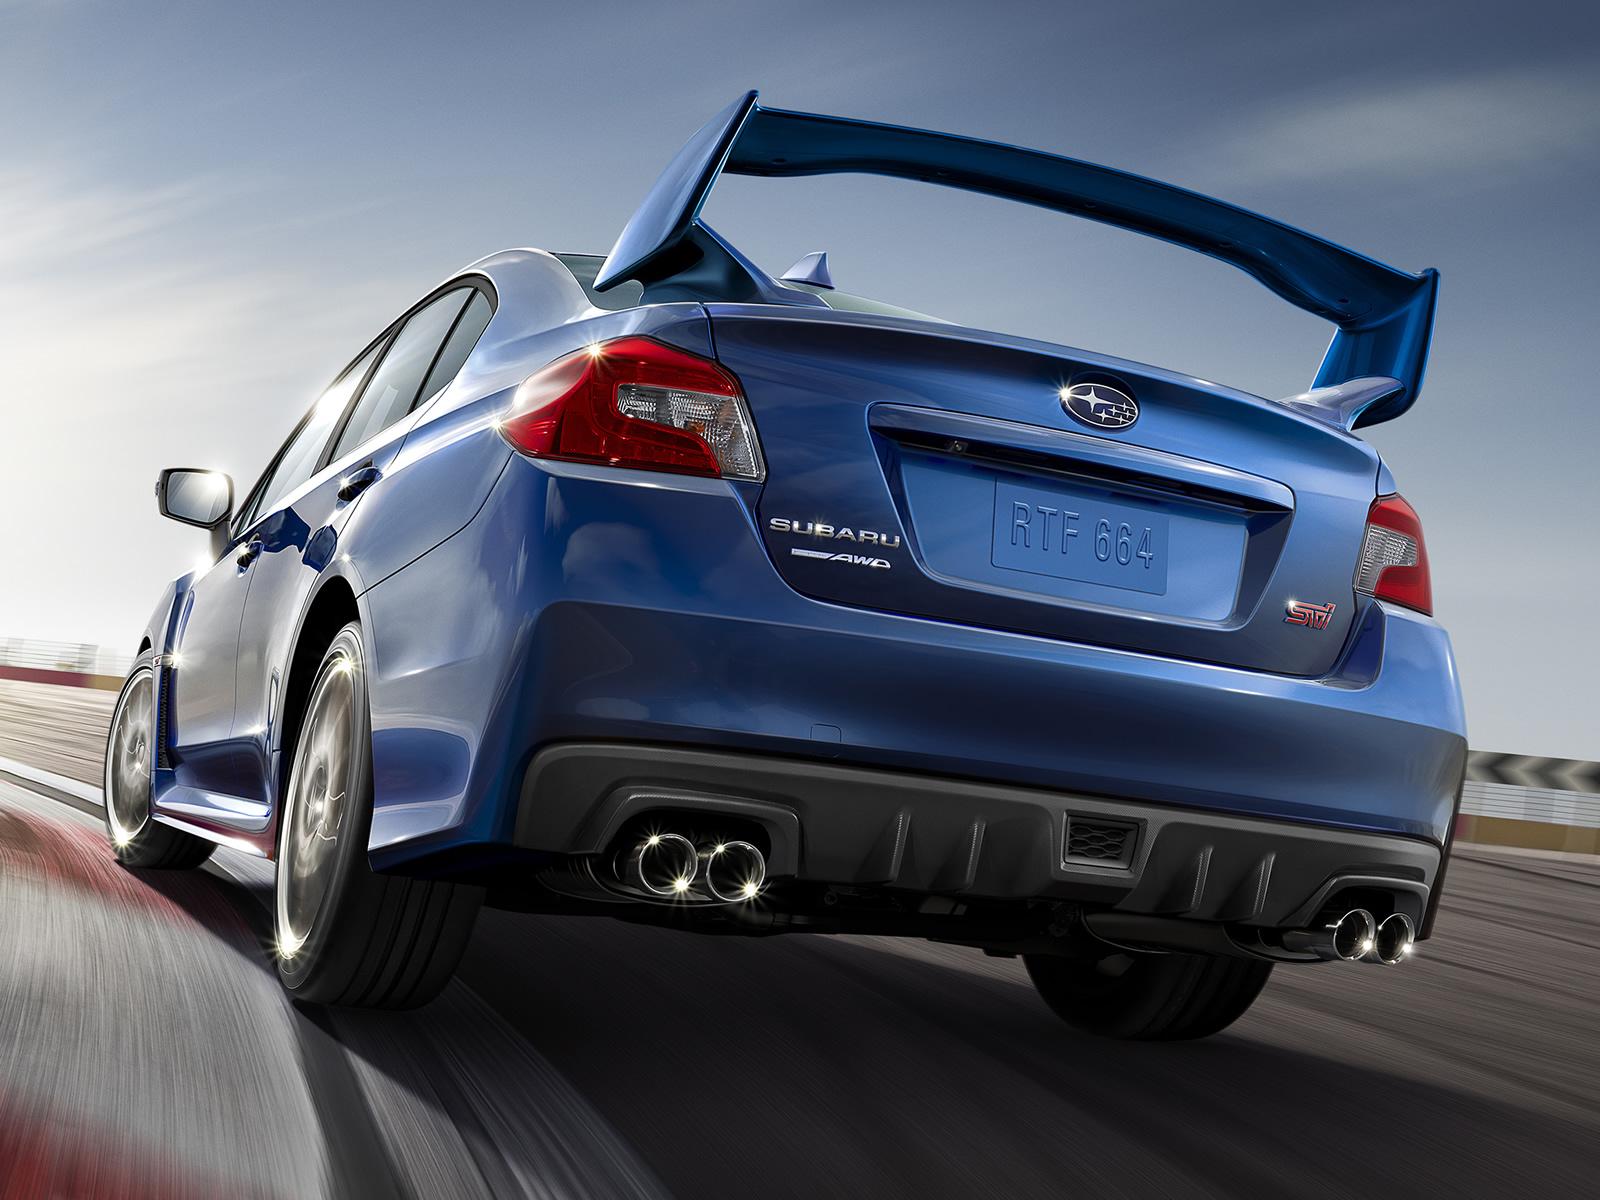 Subaru Cars News 2015 WRX STI officially revealed